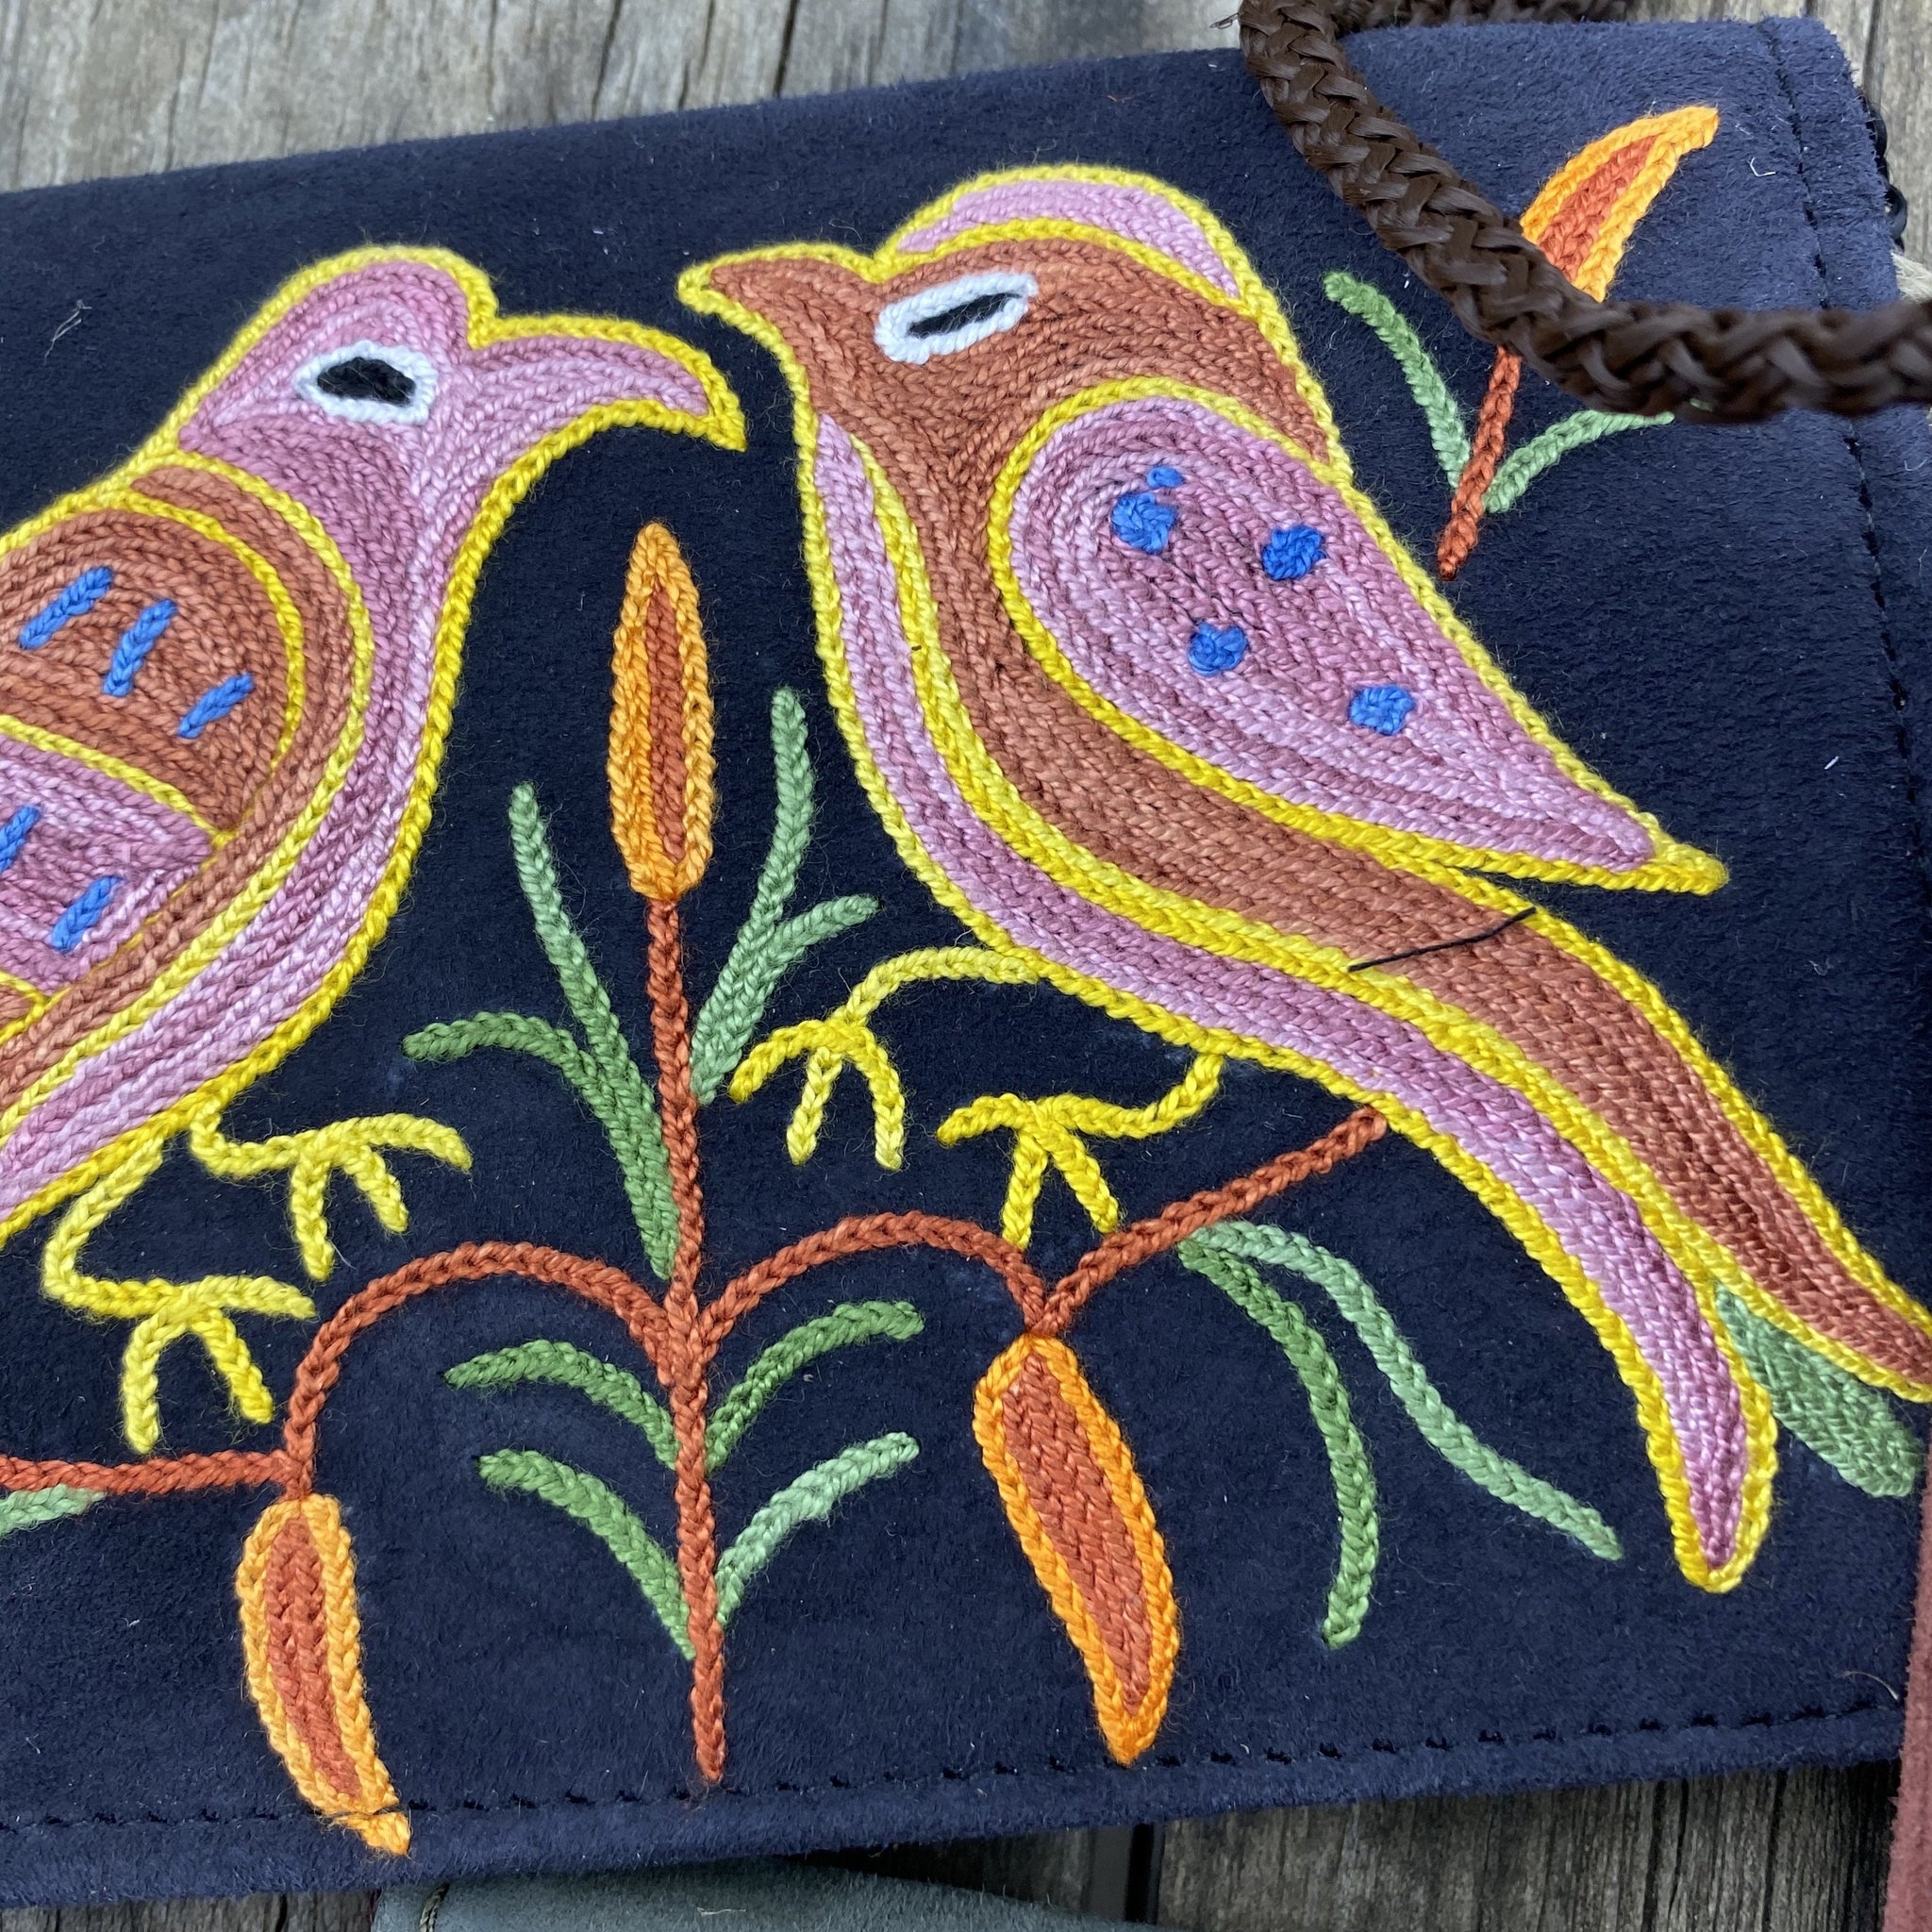 Fair Trade Ethical Embroidered Suede Handbag Two Birds Design-Assorted